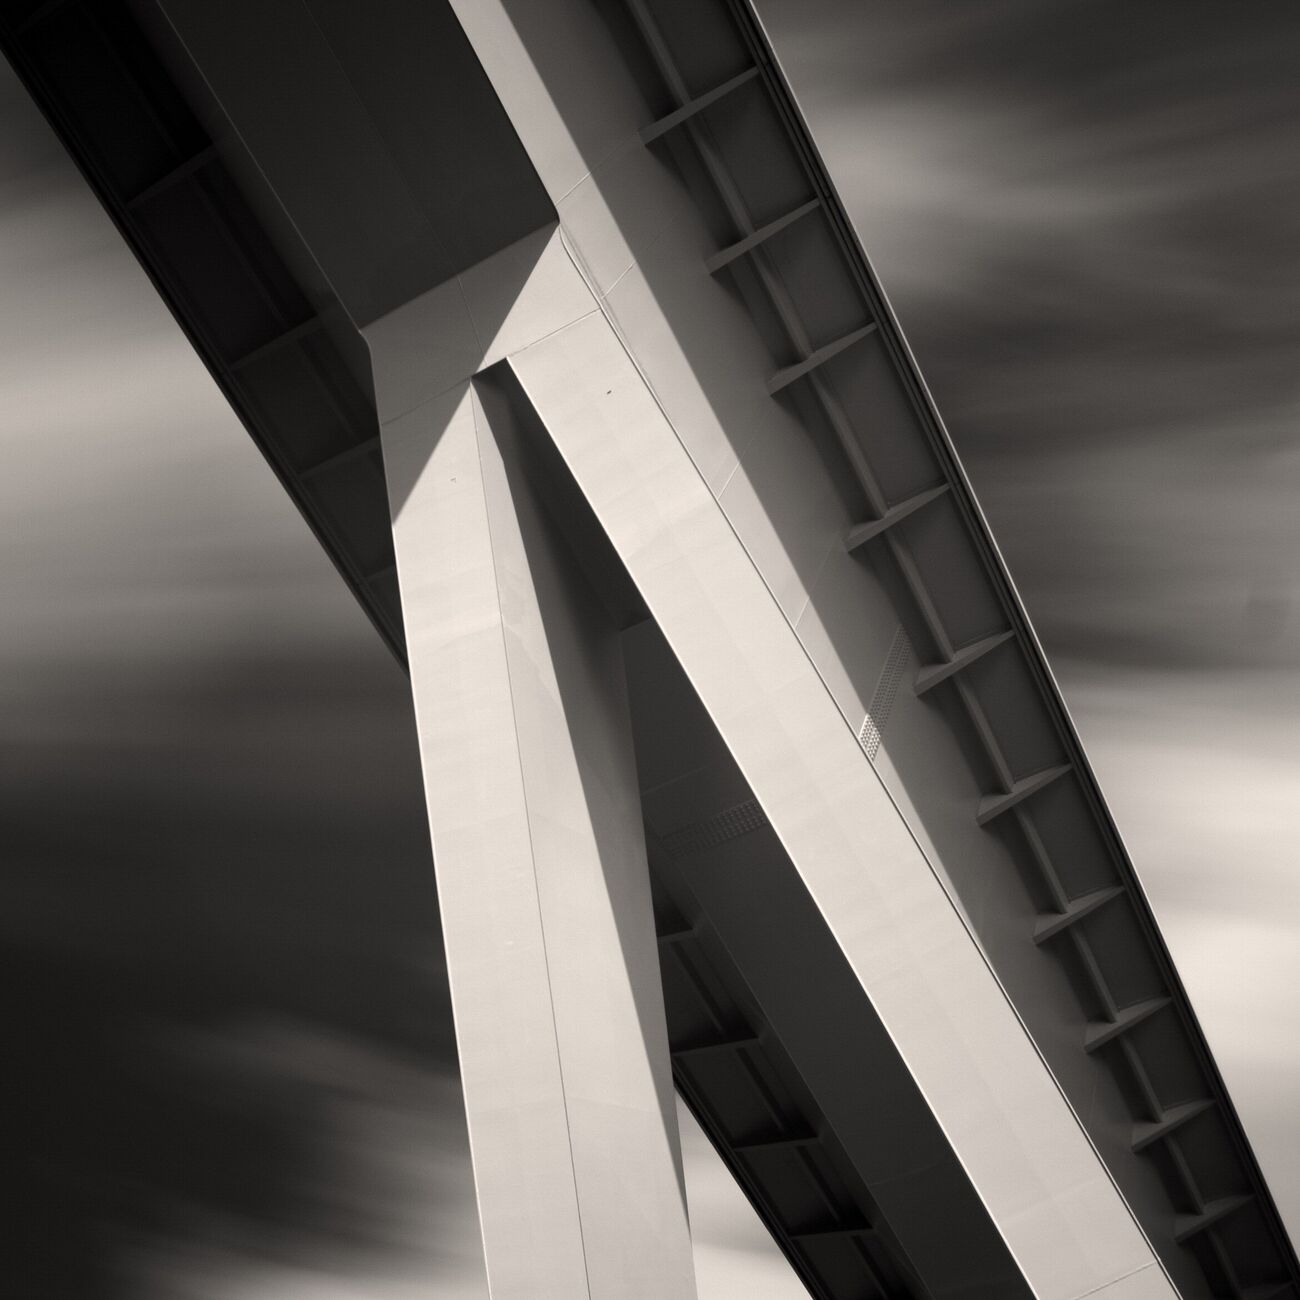 Photography 9.1 x 9.1 in, Joseph de Brix Bridge. Ref-764-2 - Denis Olivier Photography